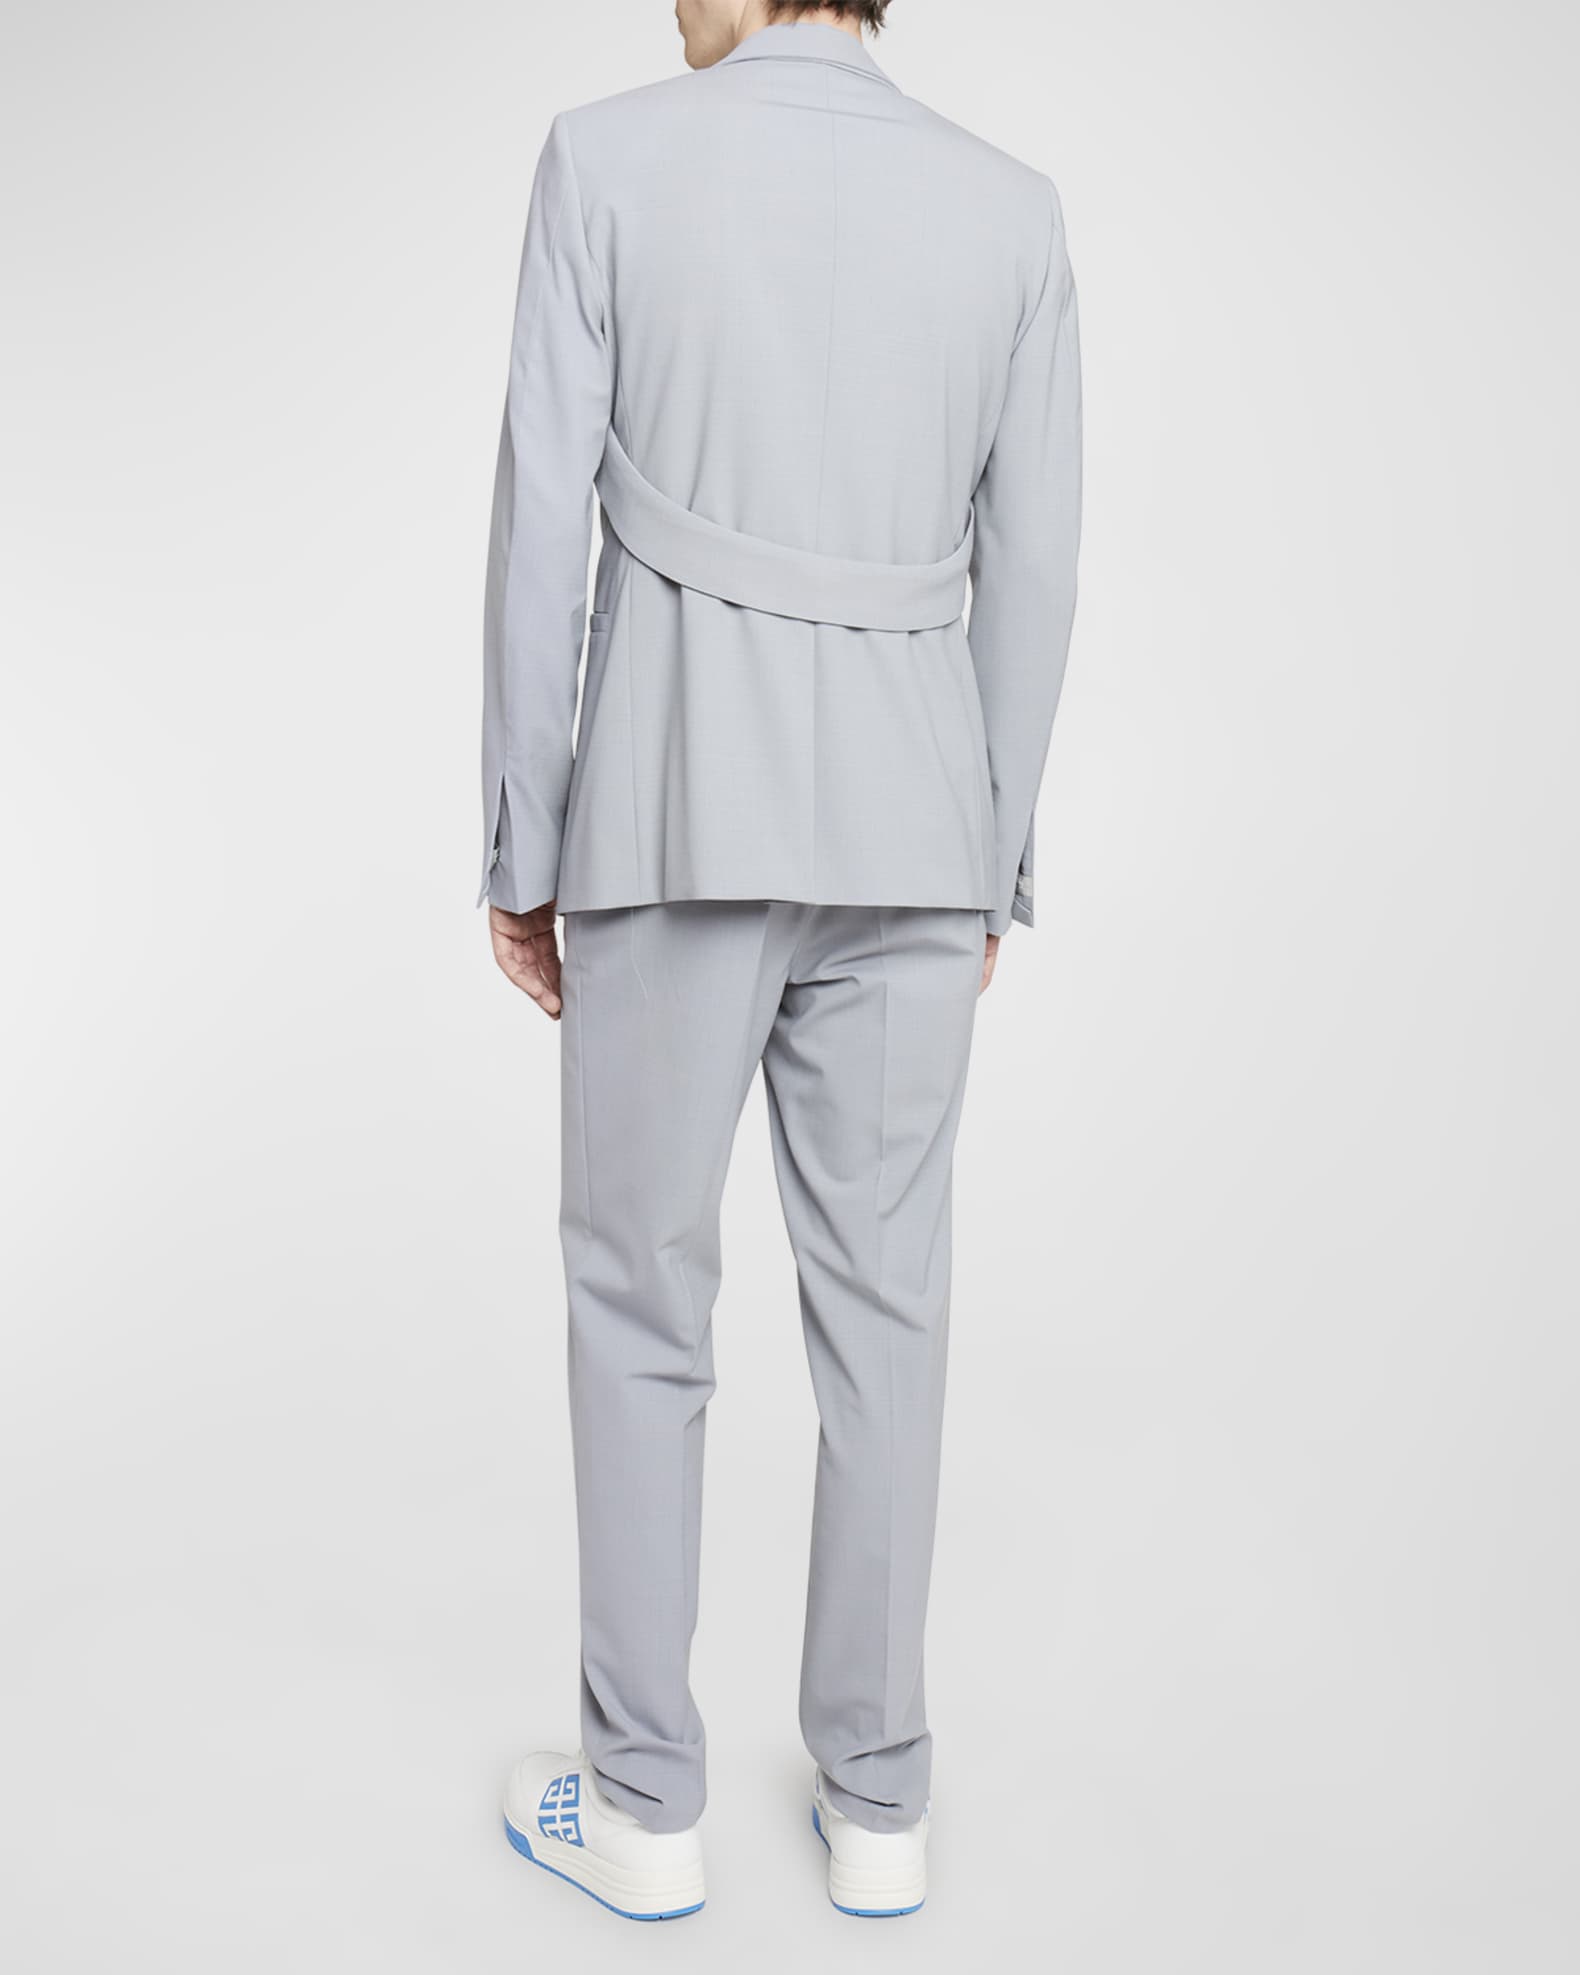 Givenchy Men's U-Lock Harness Slim Suit Jacket | Neiman Marcus